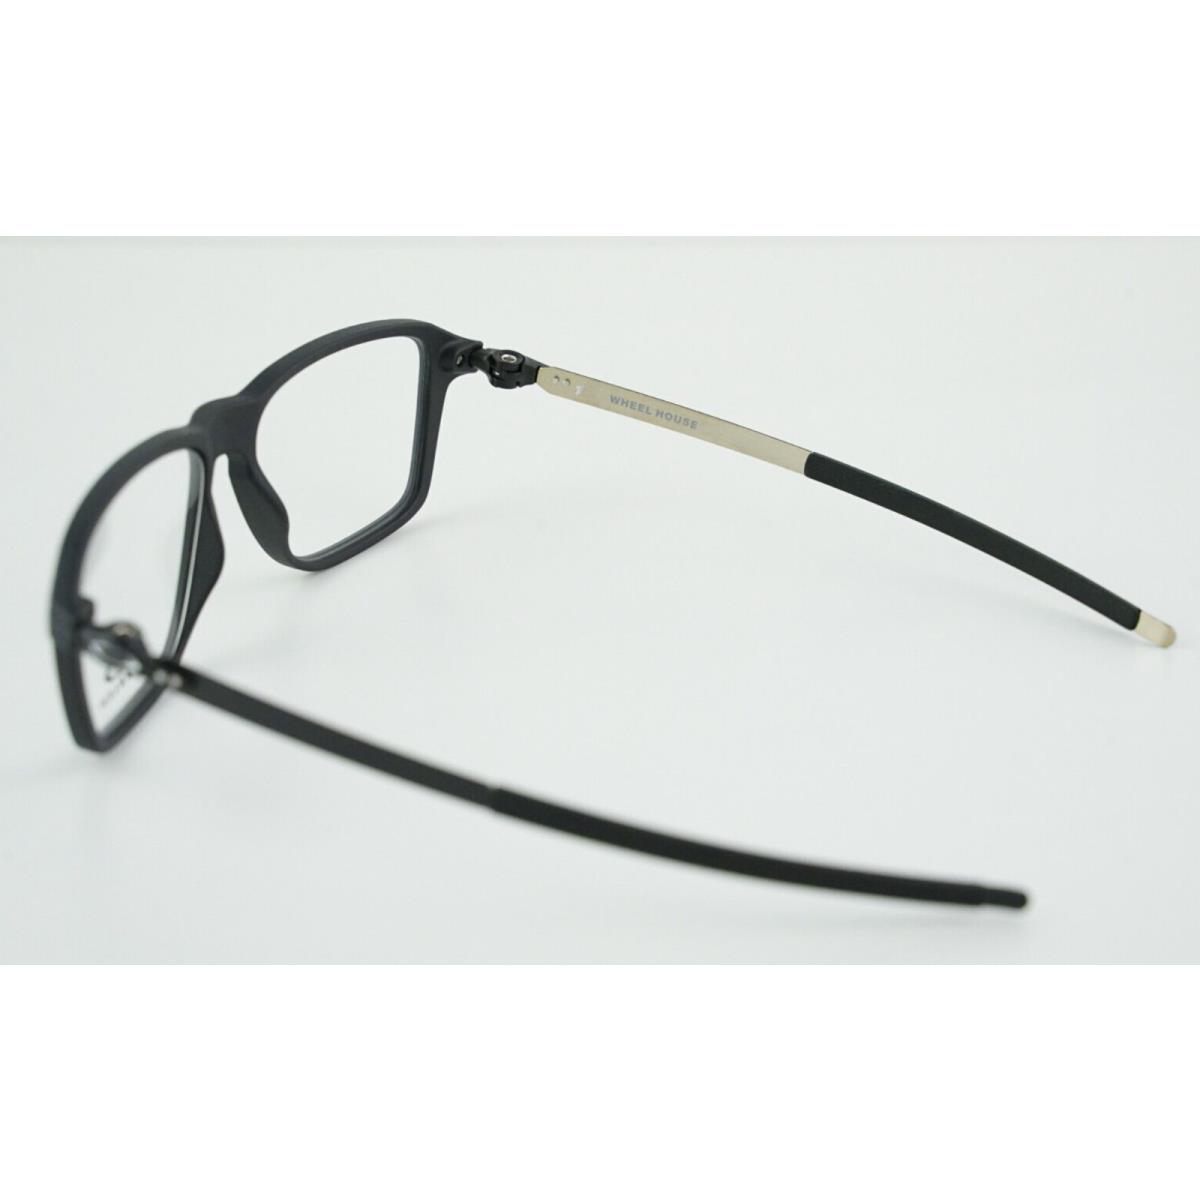 Oakley eyeglasses Wheel House - Matte Black w/ Black & Silver Temples Frame, Demos with imprint Lens 2